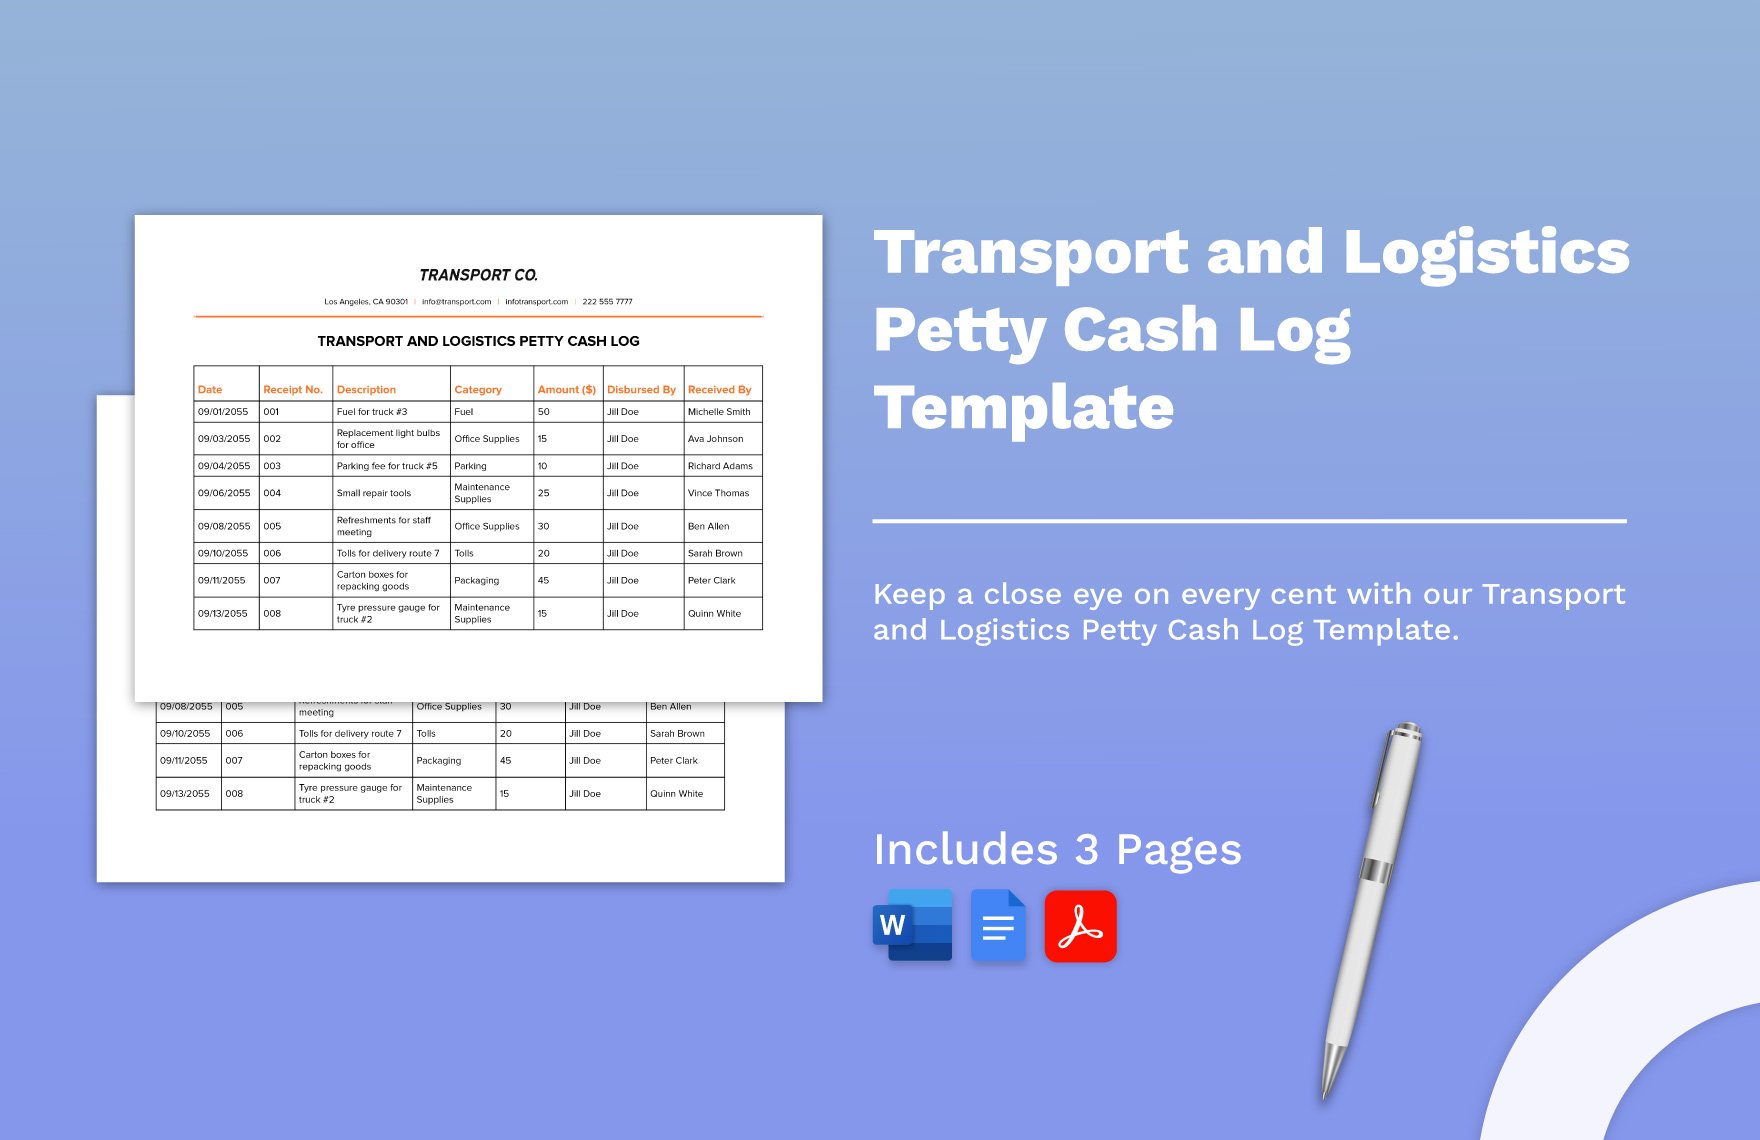 Transport and Logistics Petty Cash Log Template